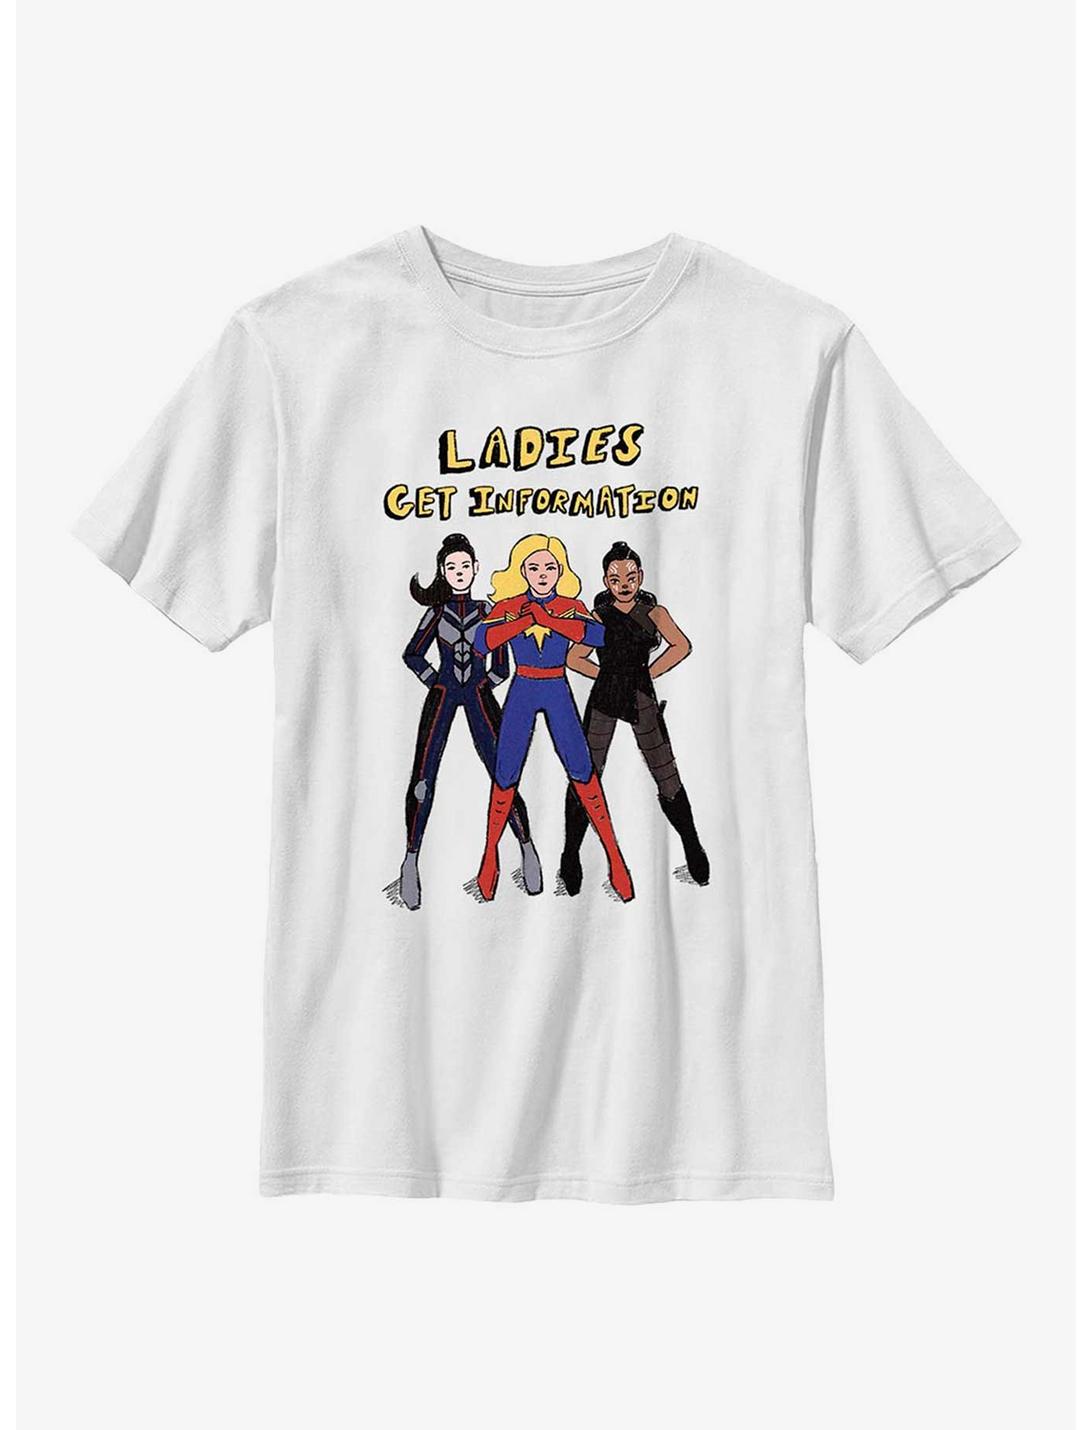 Marvel Ms. Marvel Ladies Get Info Youth T-Shirt, WHITE, hi-res